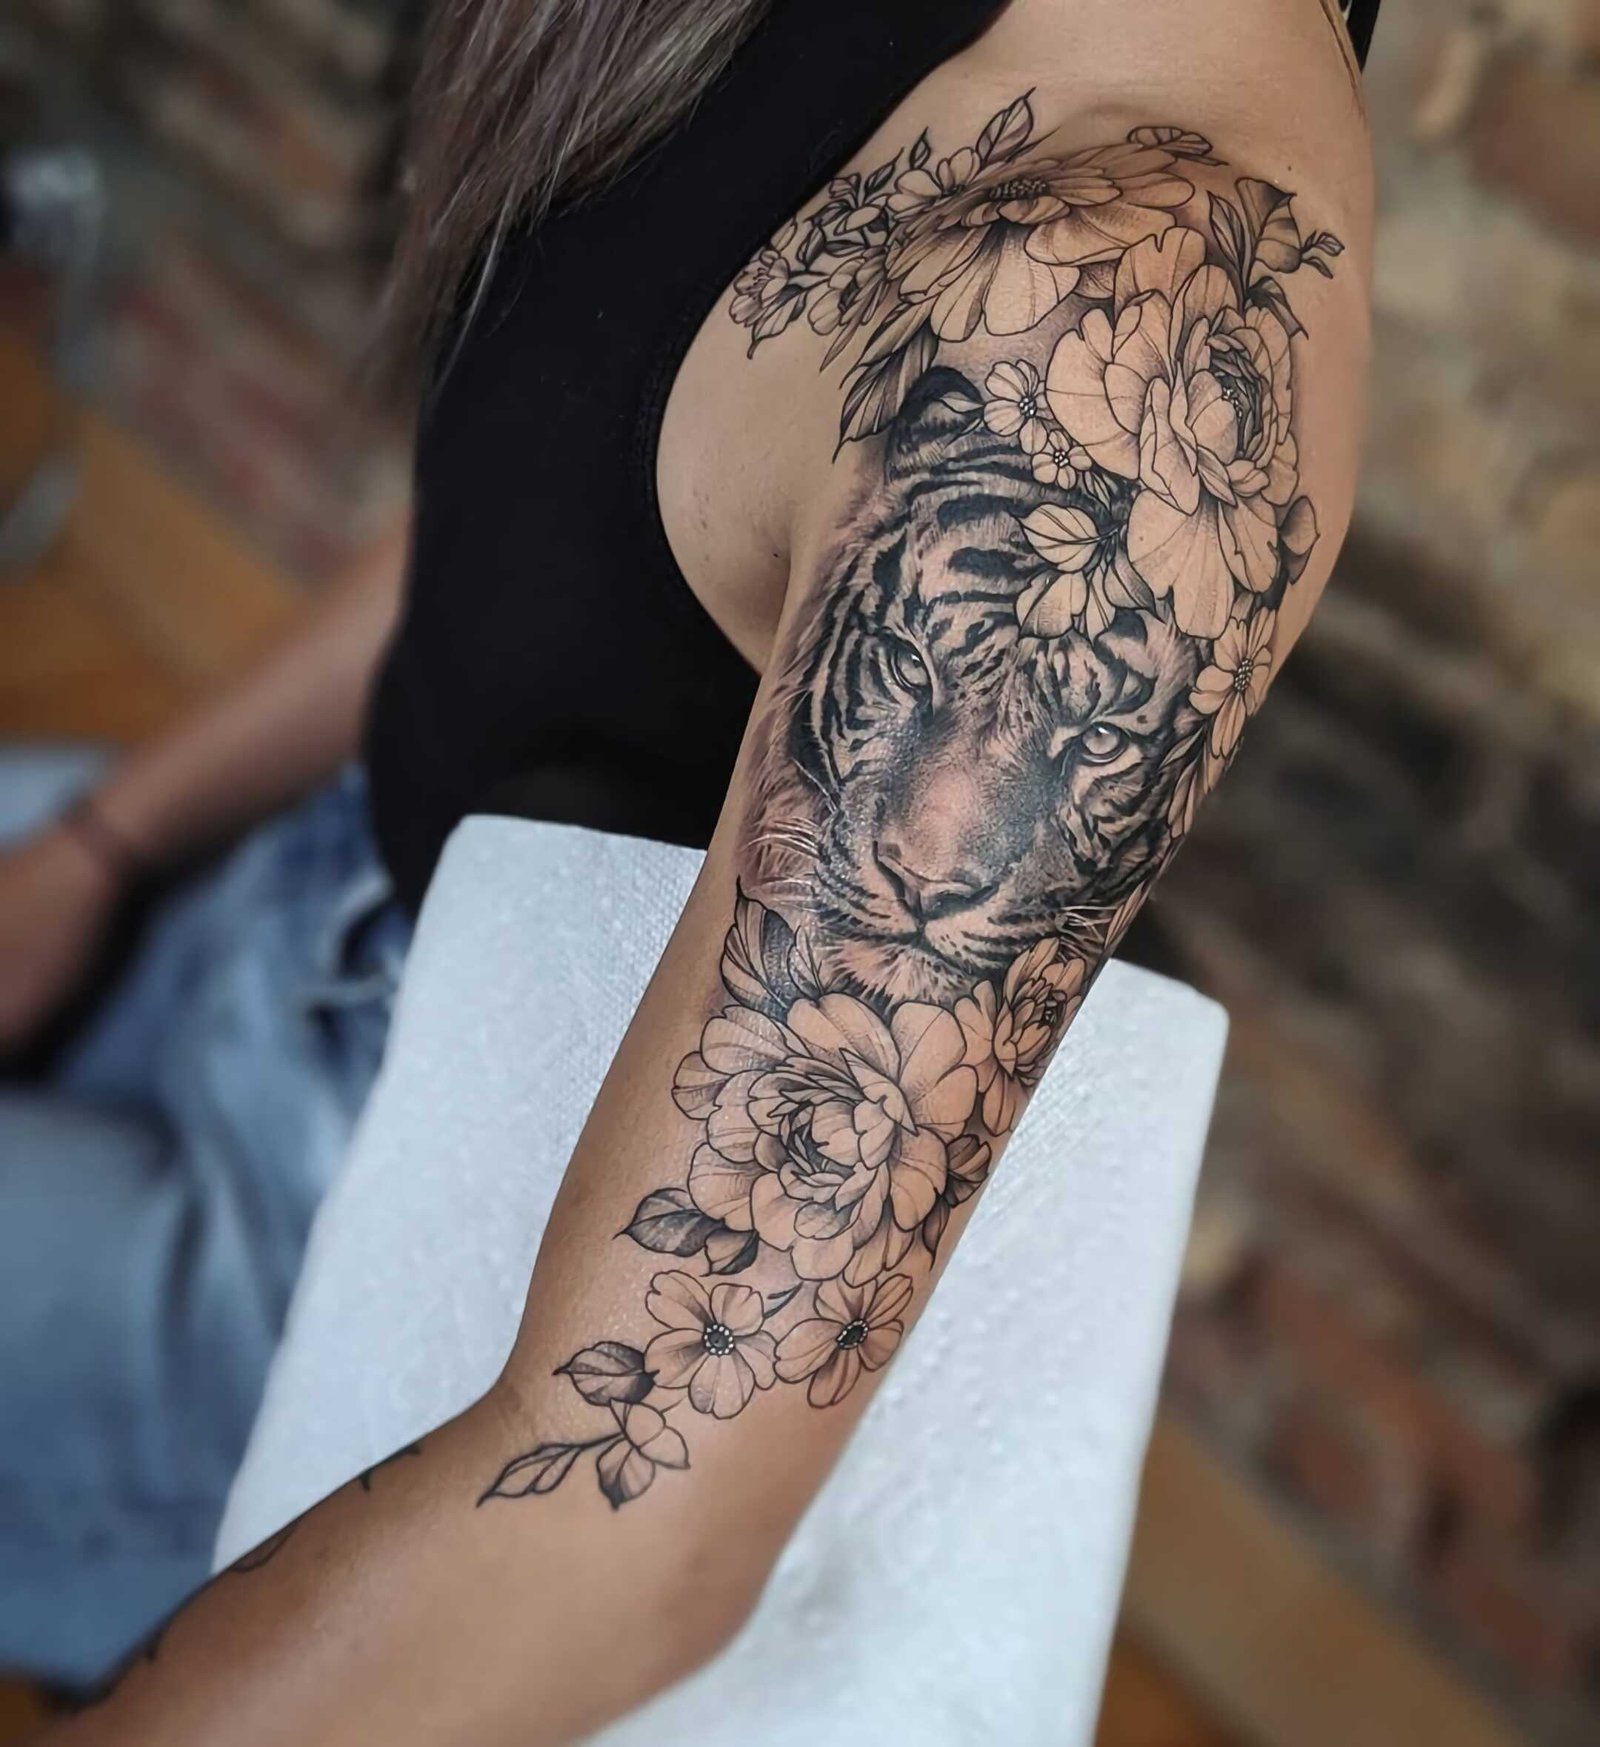 красивая татуировка тигра на руке